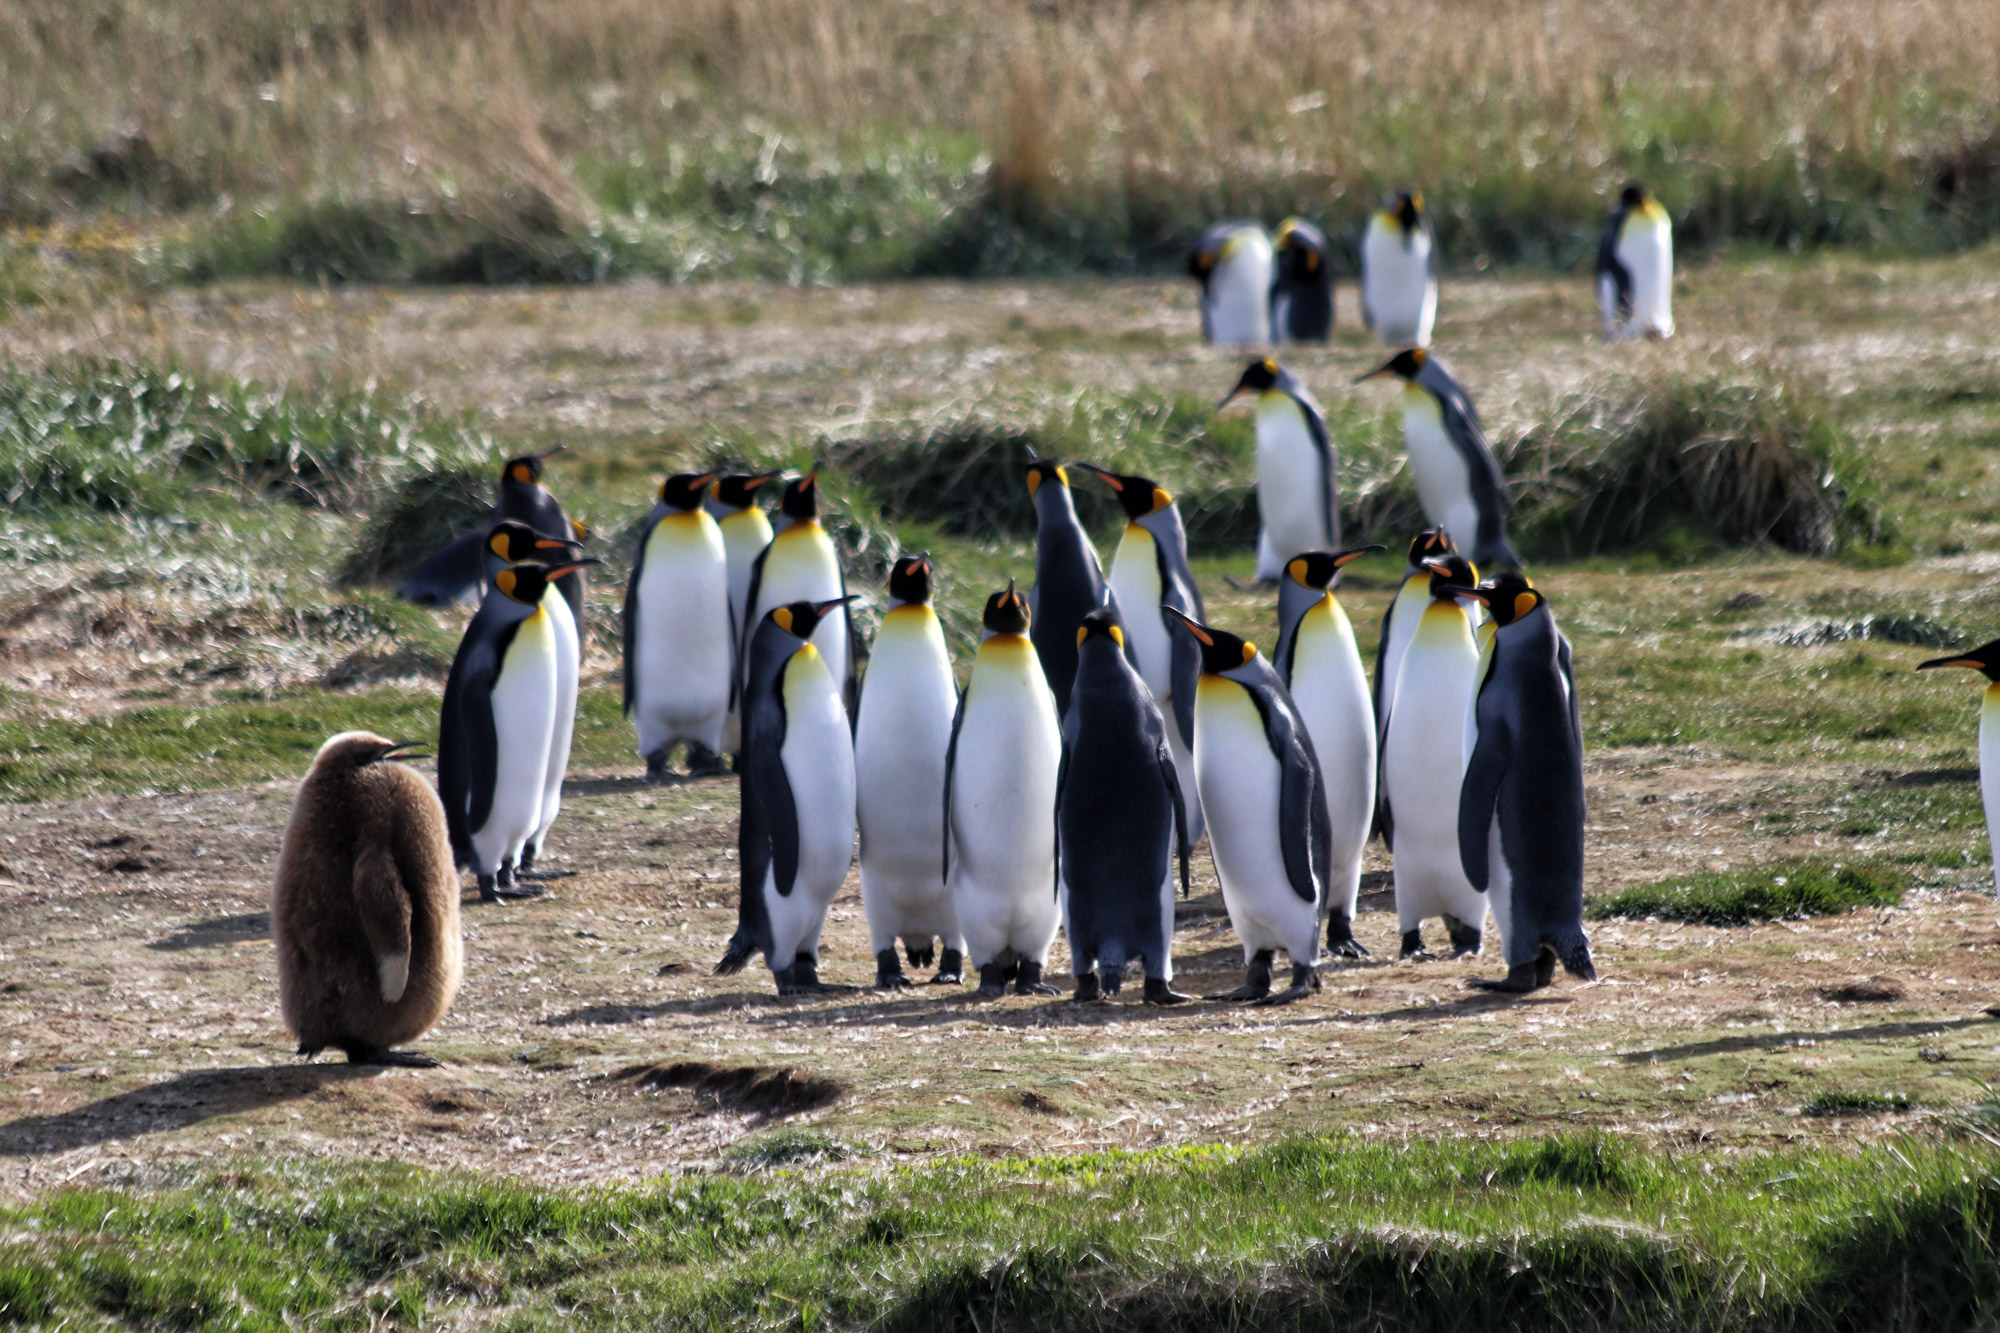 Koningspinguïns spotten op Tierra del Fuego